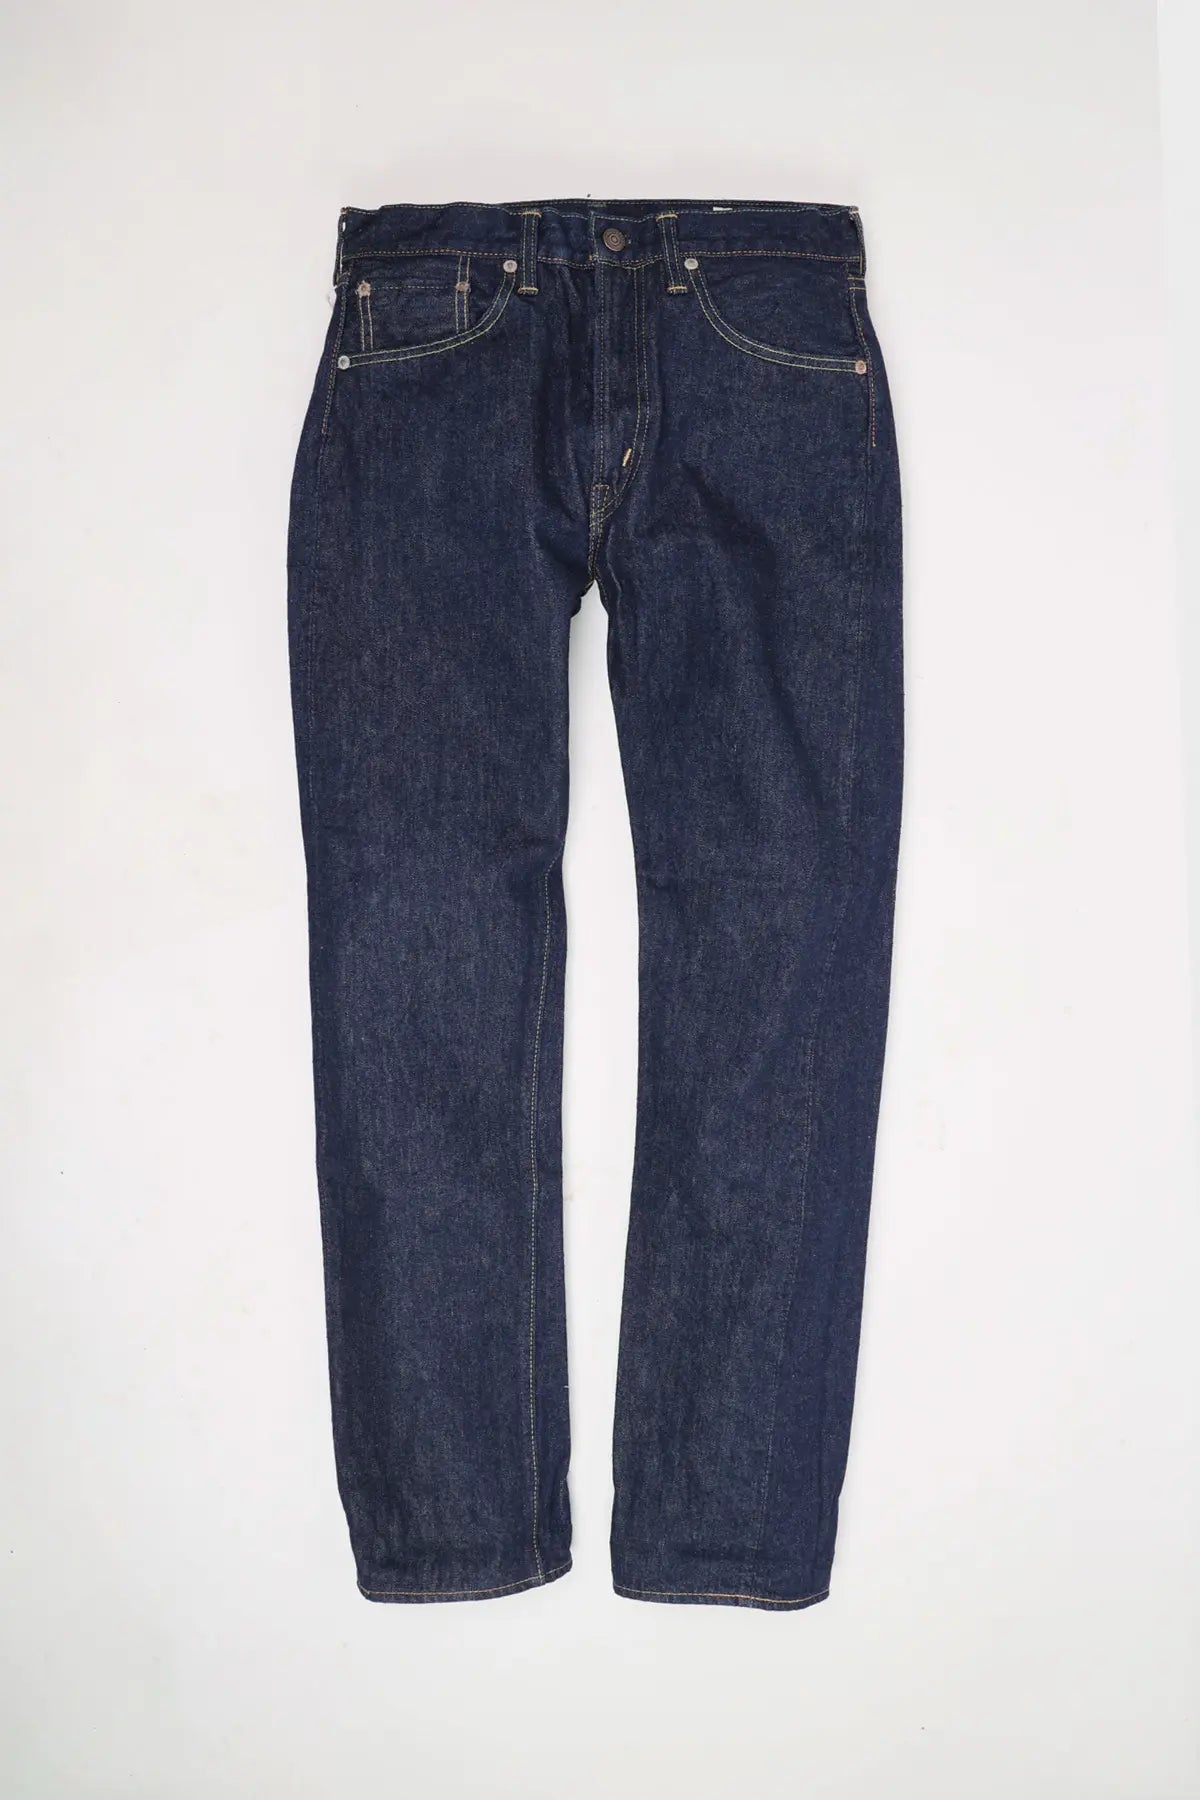 orSlow 107 Ivy Denim, Jeans, One Wash